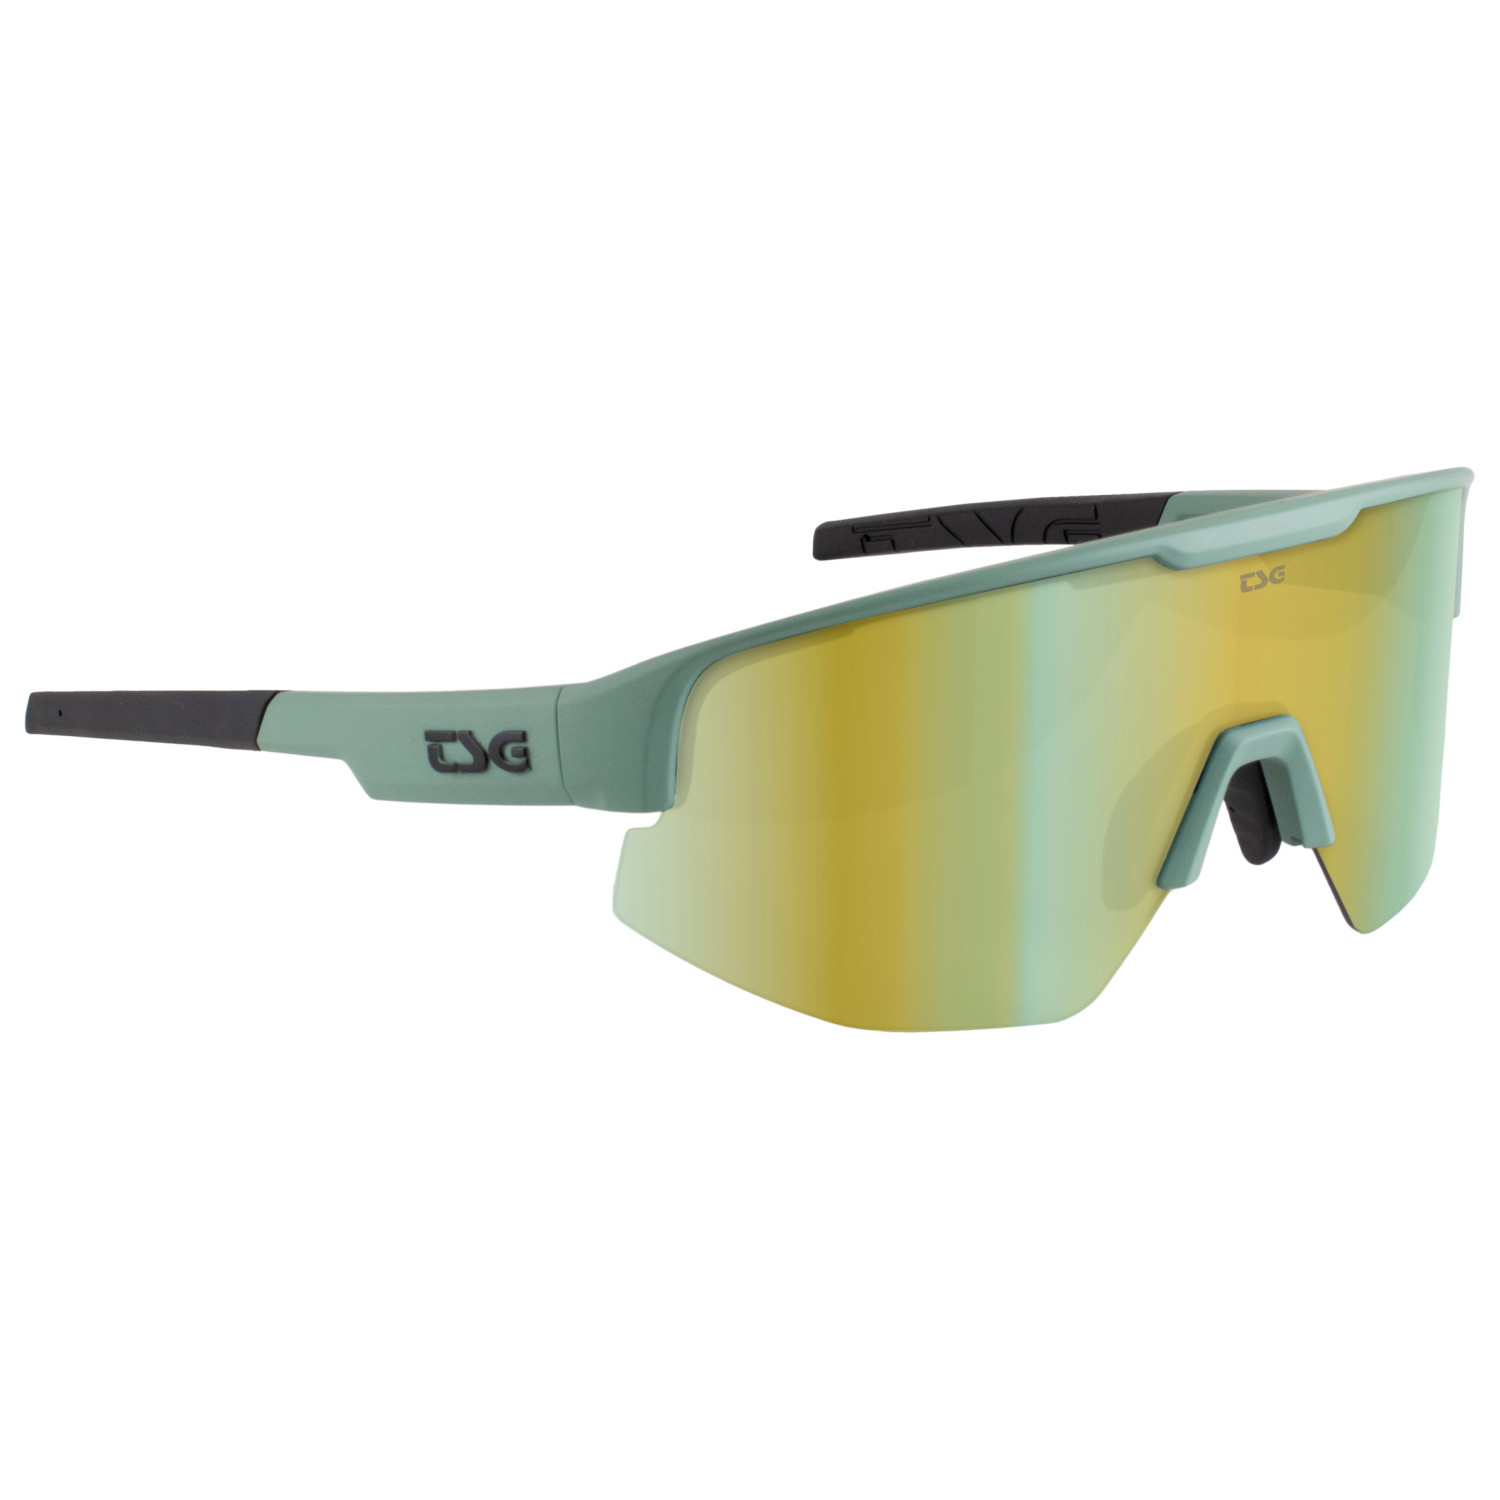 Велосипедные очки Tsg Loam Sunglasses, цвет Green/Grey солнцезащитные очки explore sunglasses unisex rapha цвет dark navy purple green lens